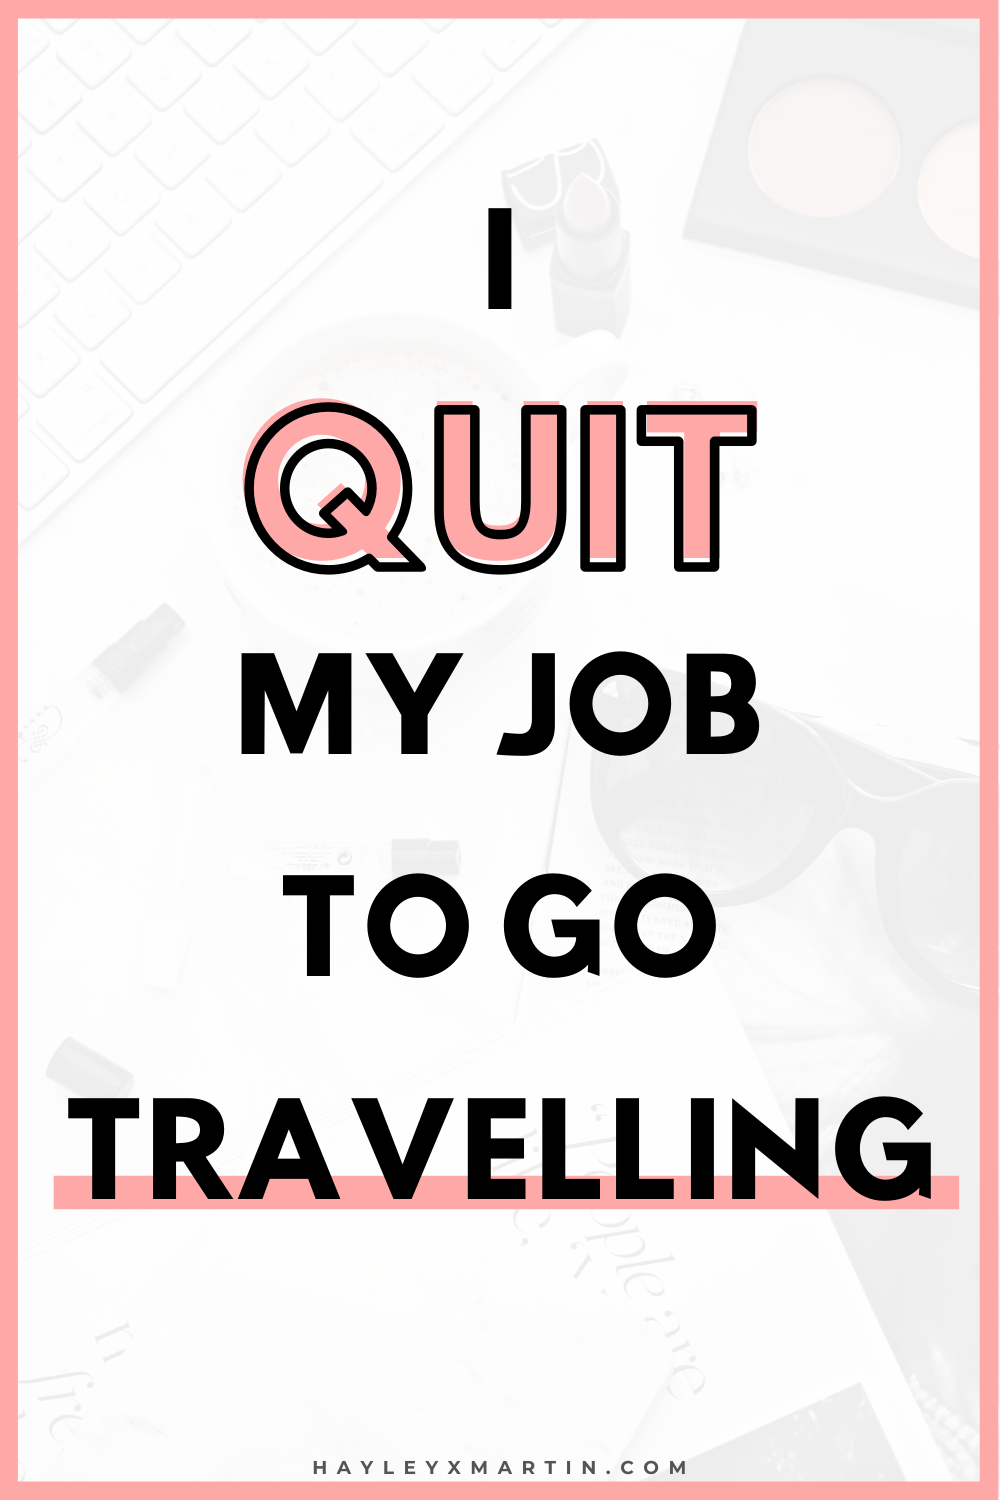 I QUIT MY JOB TO GO TRAVELLING | HAYLEYXMARTIN